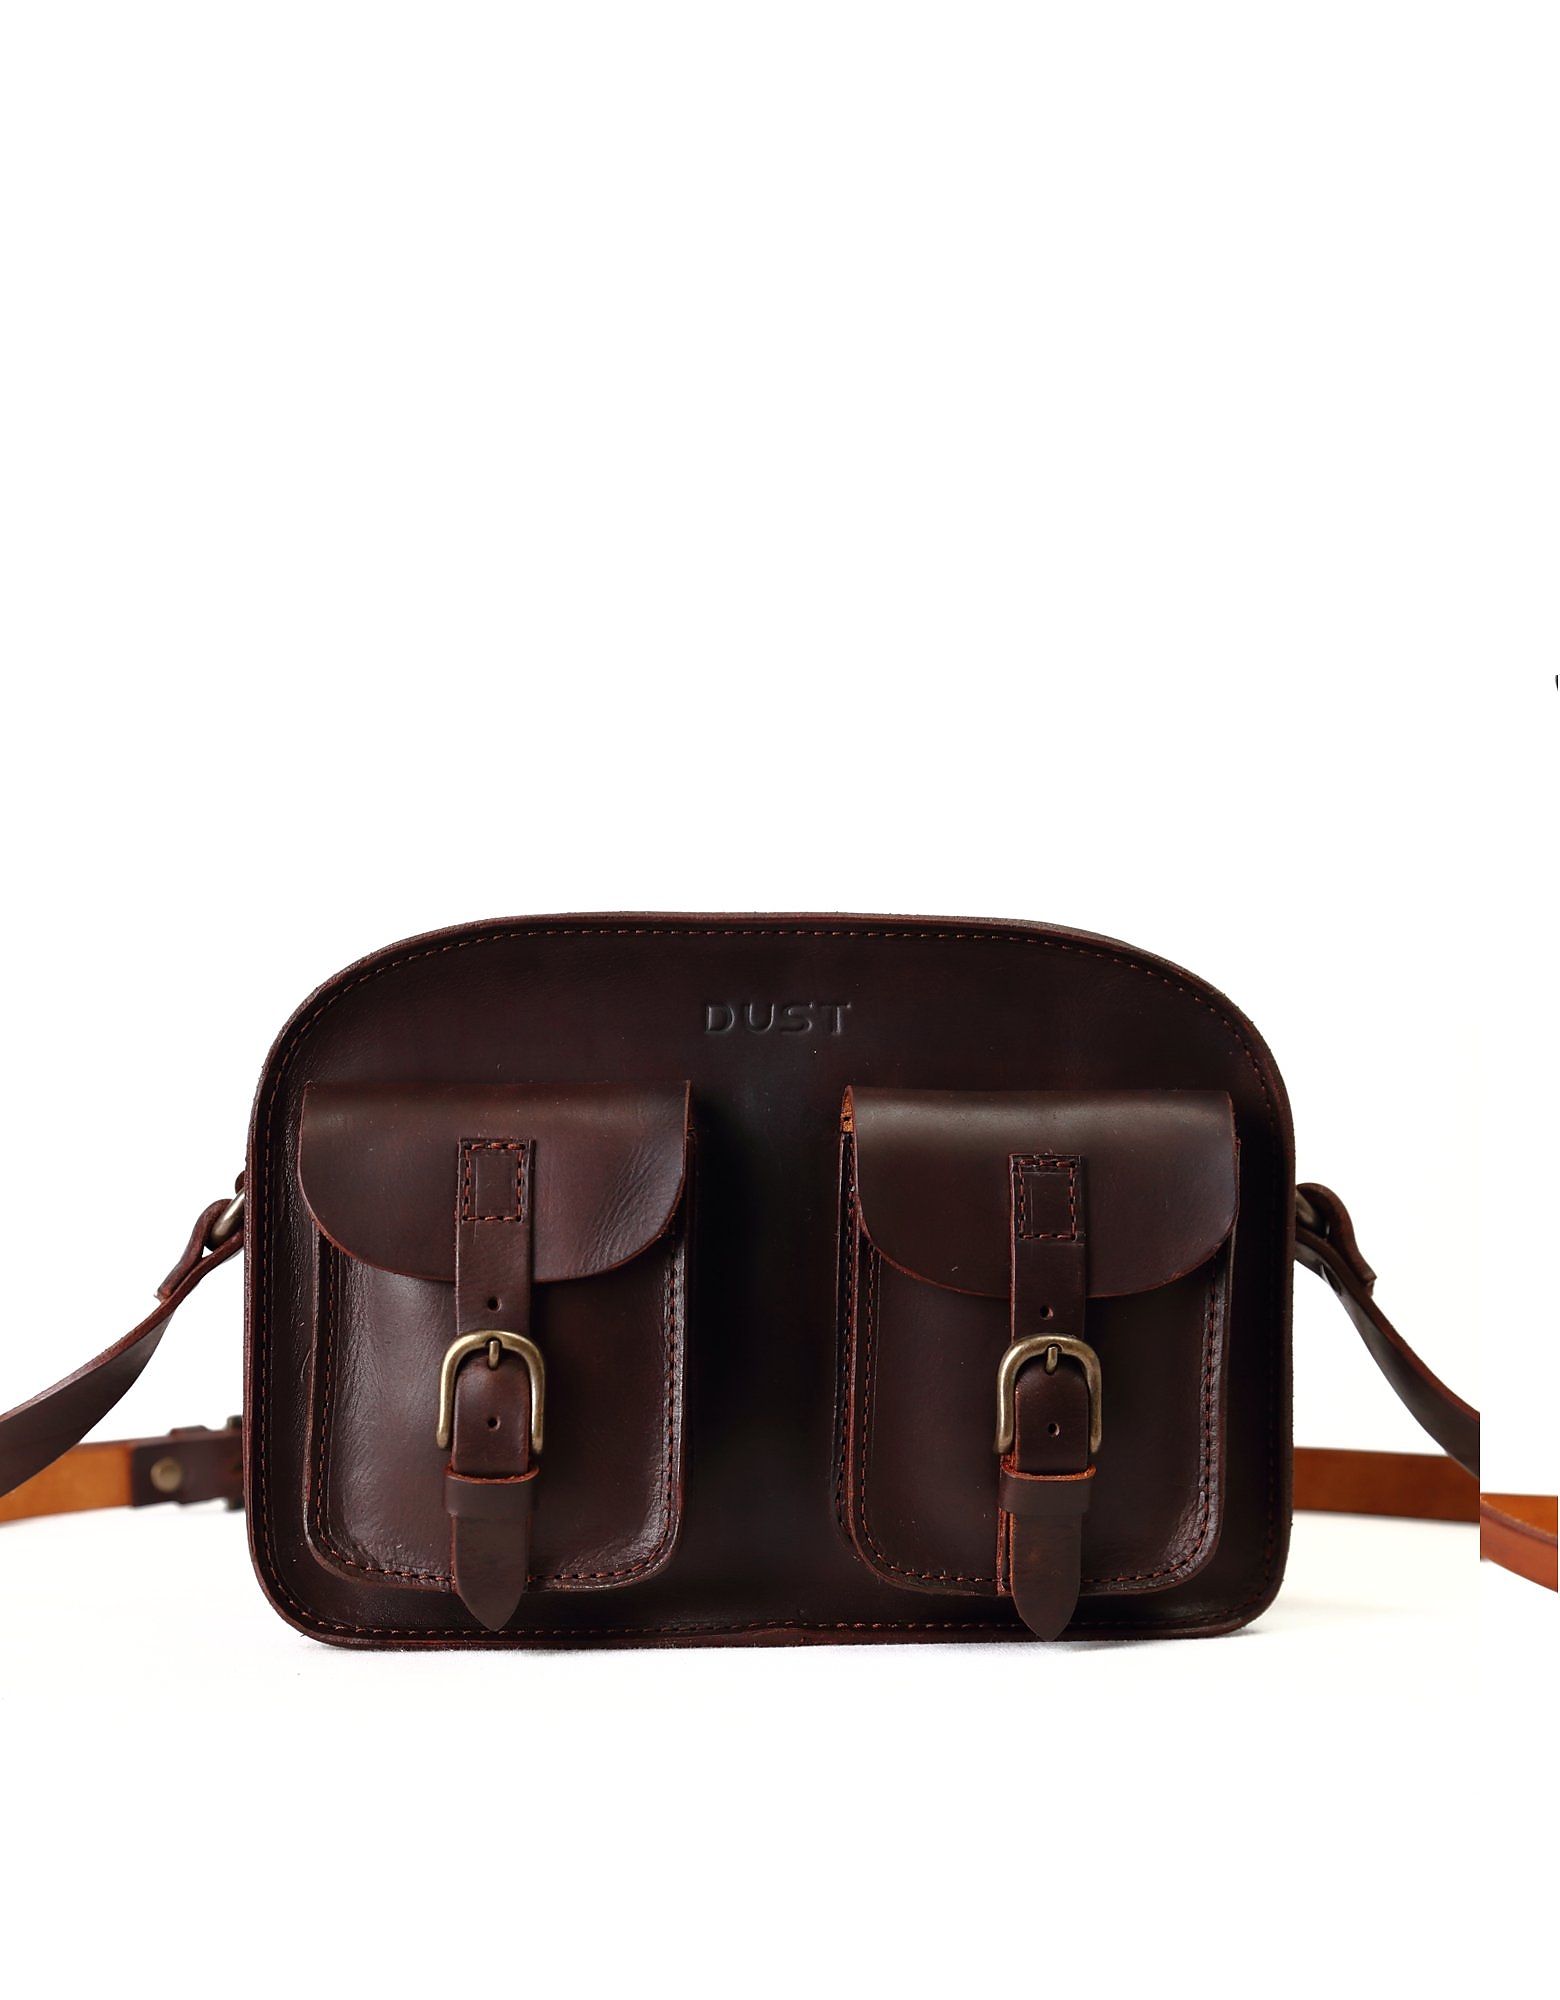 The Dust Company Designer Handbags Model 133 - Women's Compact Leather Bag In Marron Écaille